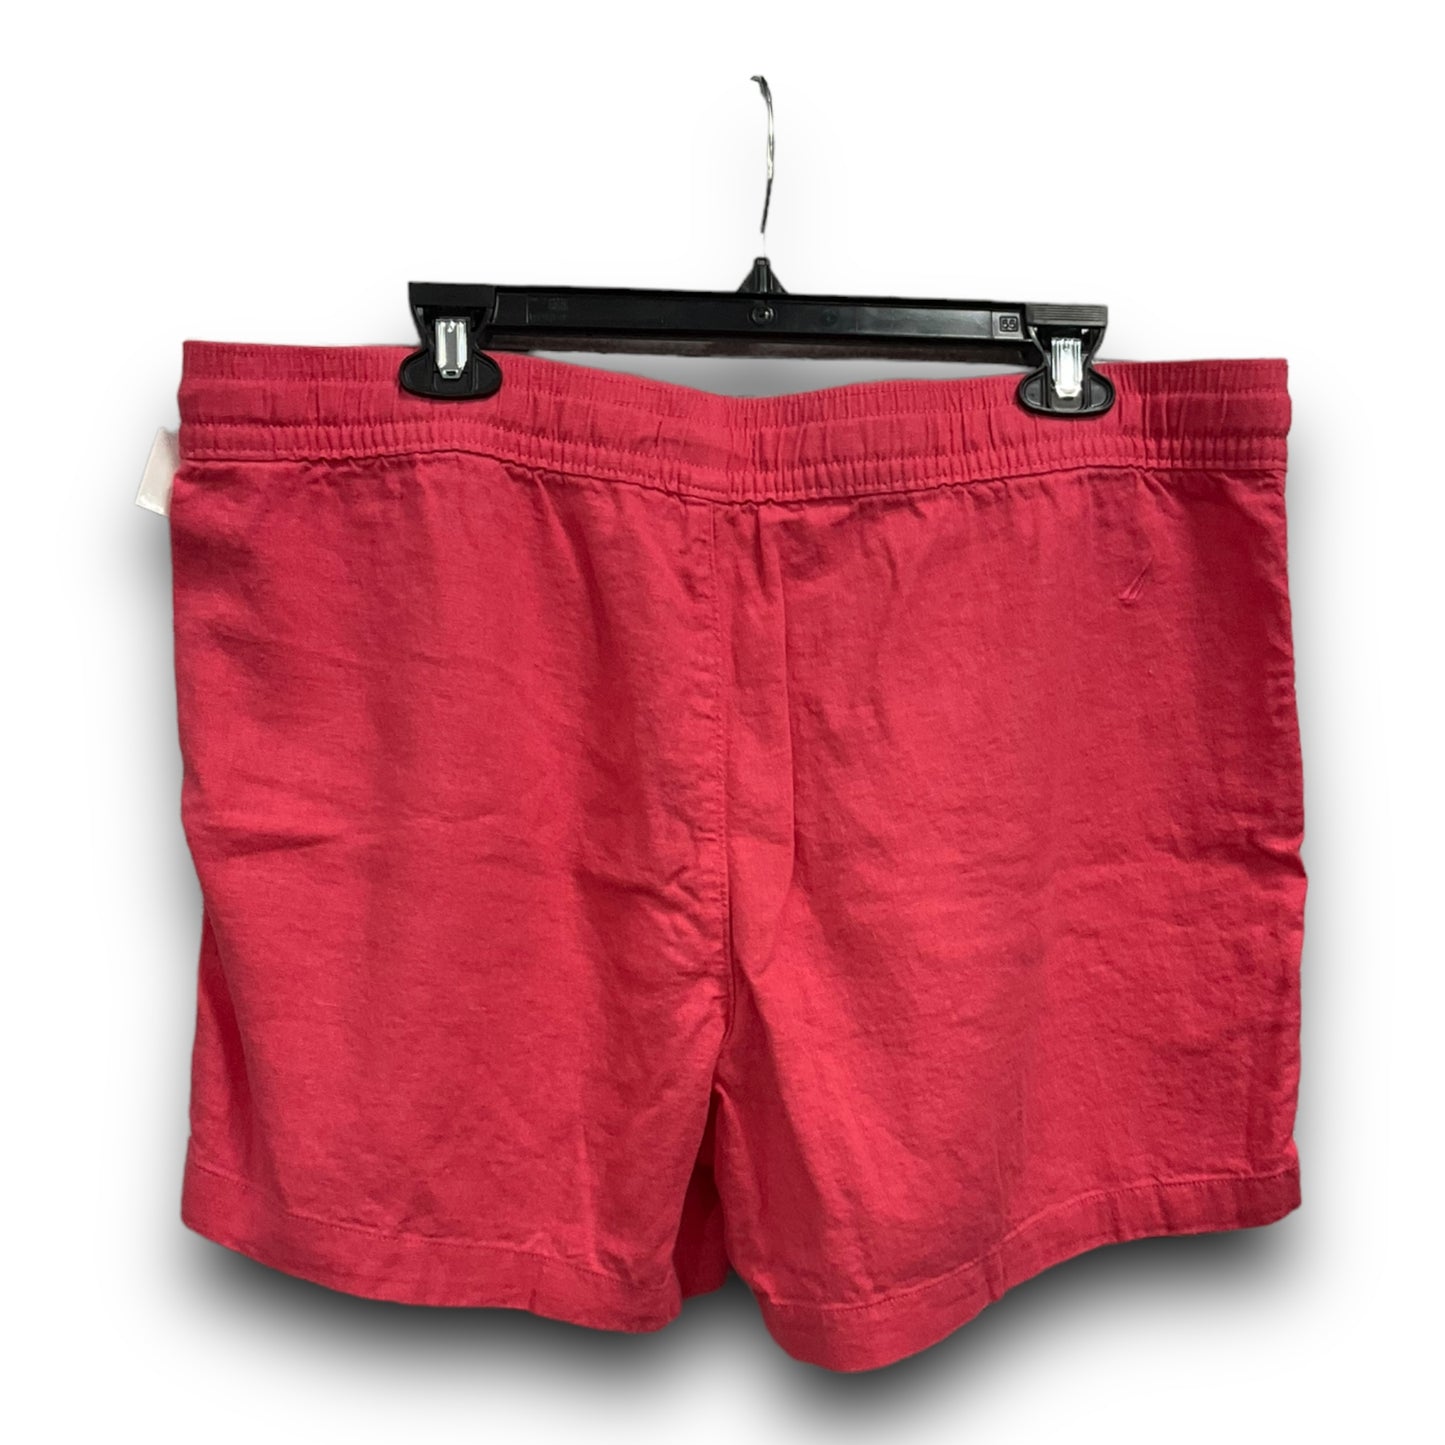 Shorts By Nautica  Size: Xl